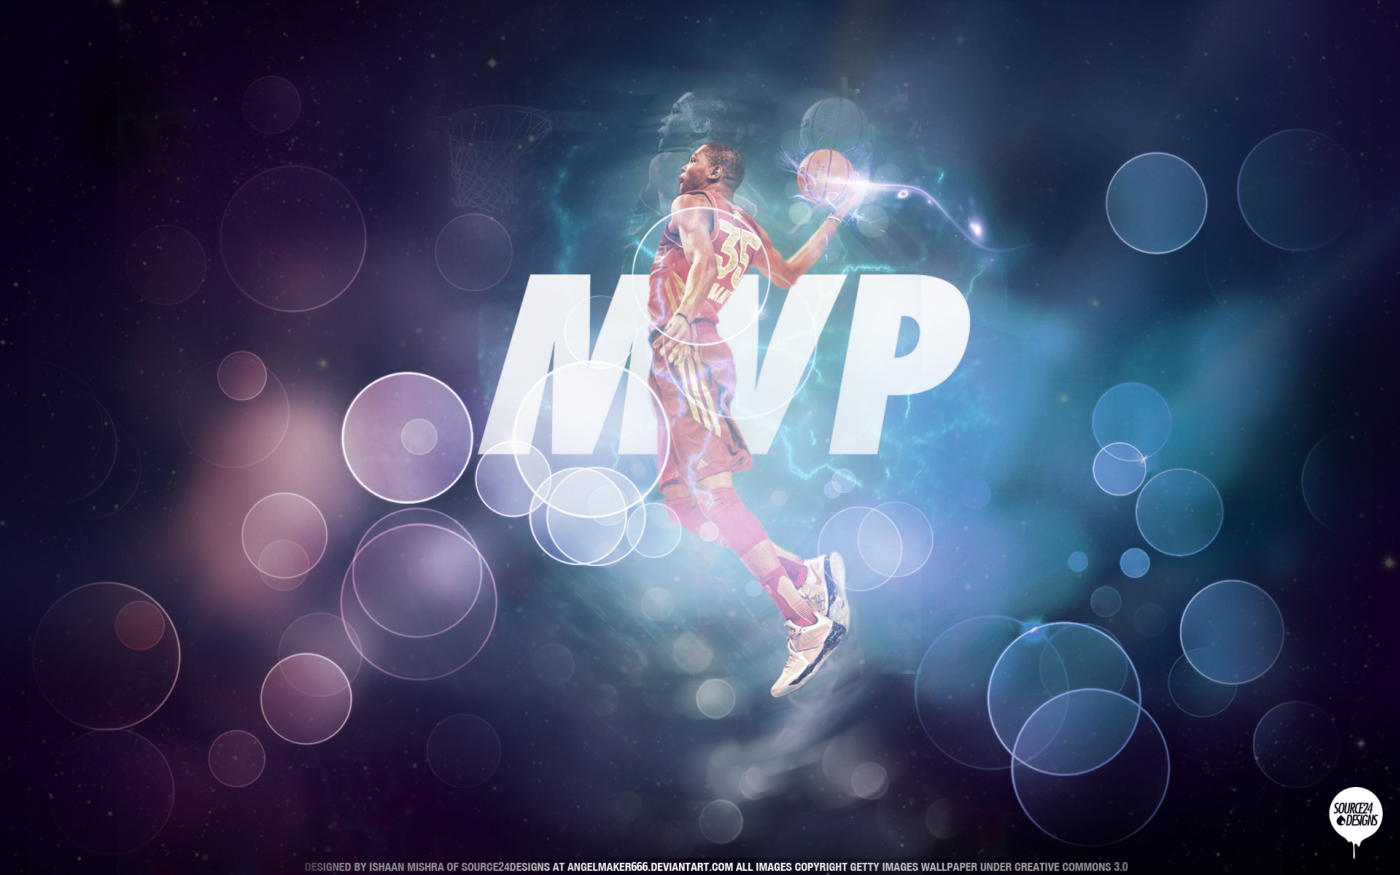 Kevin Durant NBA All-Star 2012 Wallpaper HD - Streetball